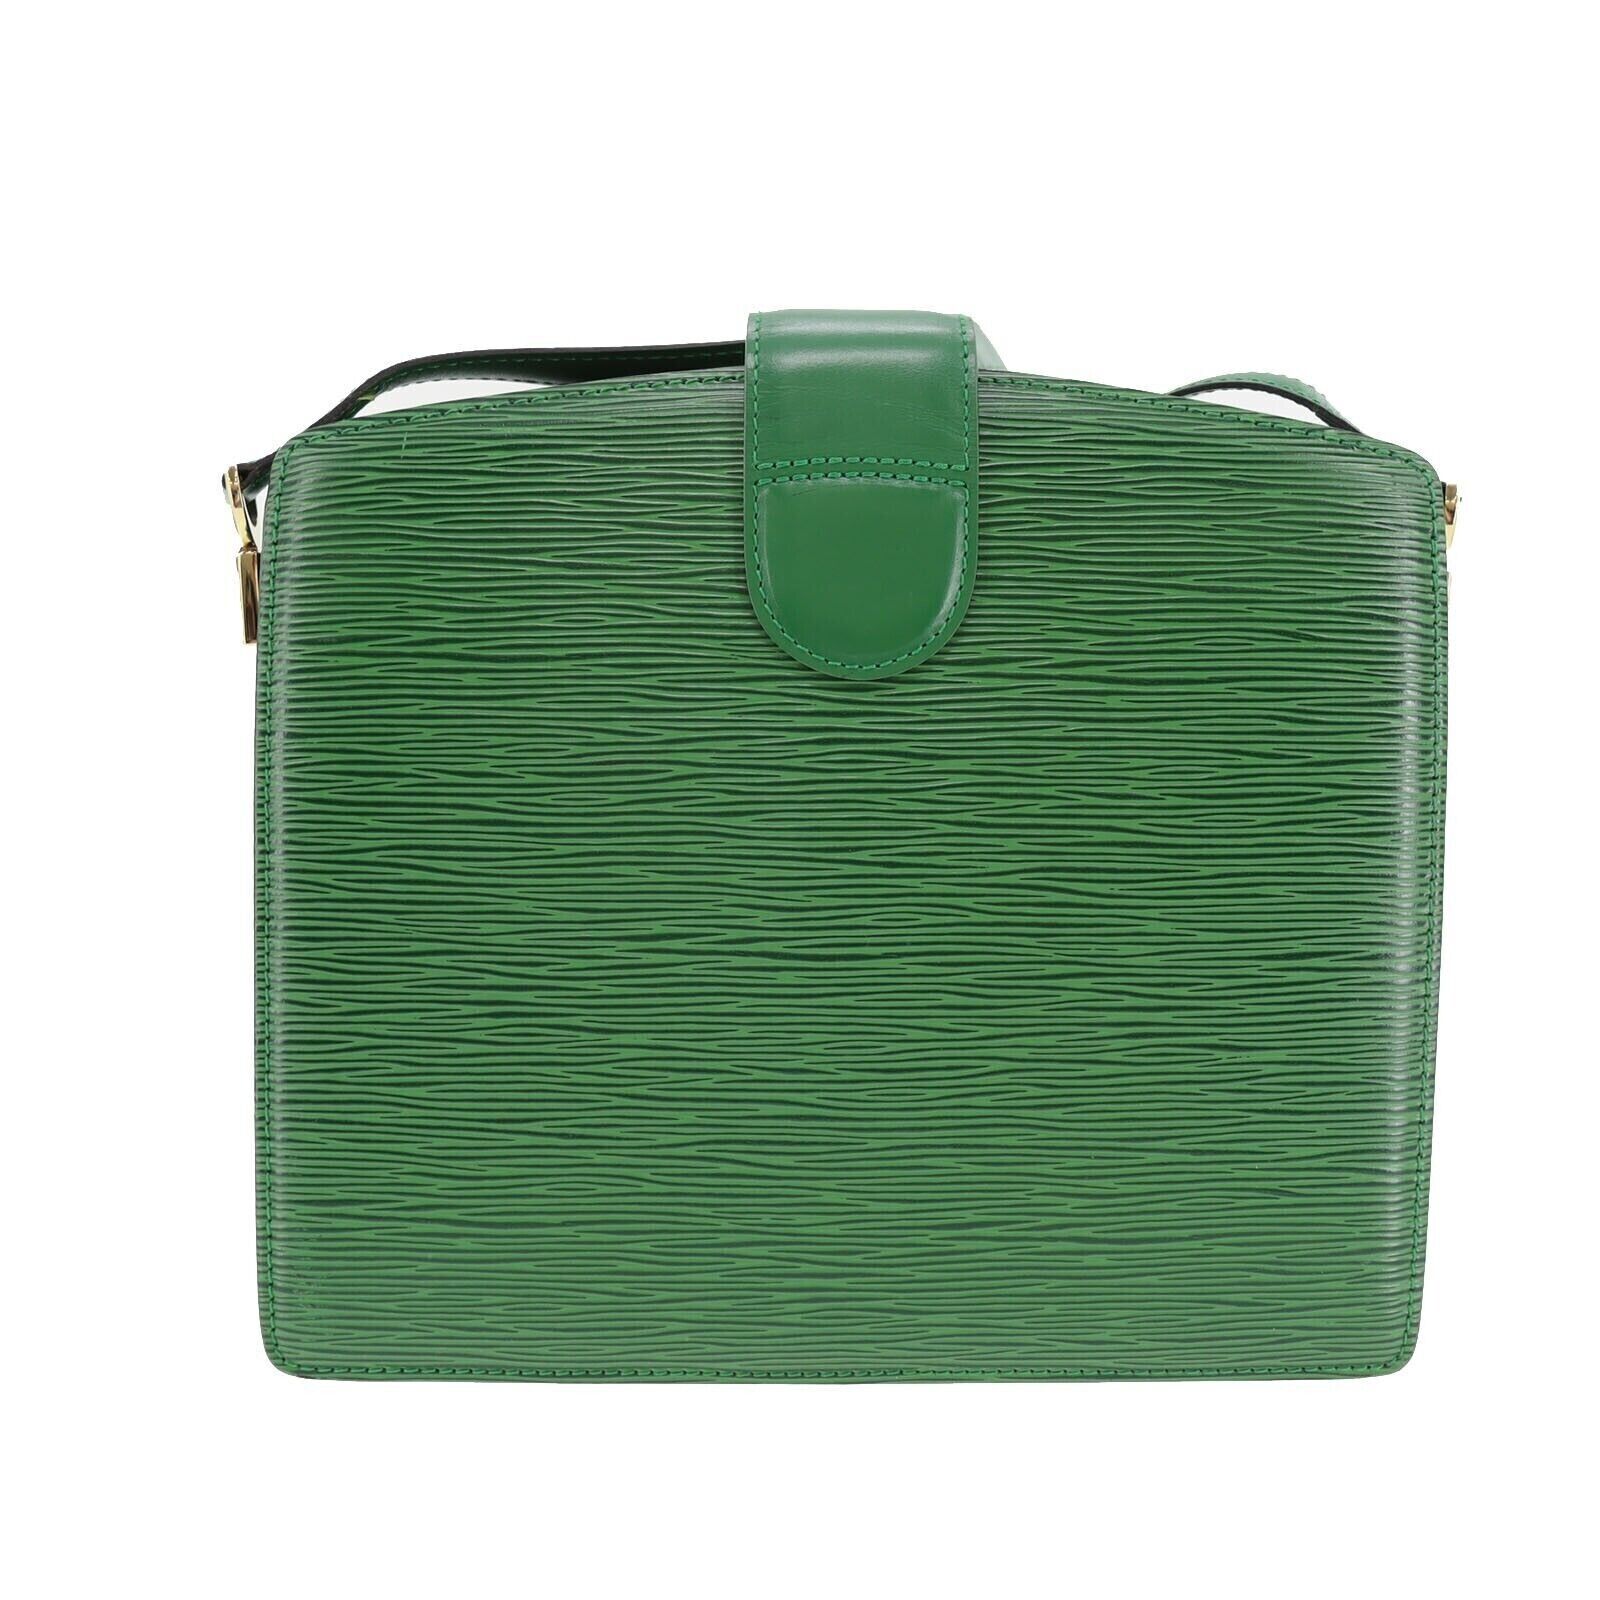 Louis Vuitton - Authenticated Capucines Handbag - Leather Green Plain for Women, Never Worn